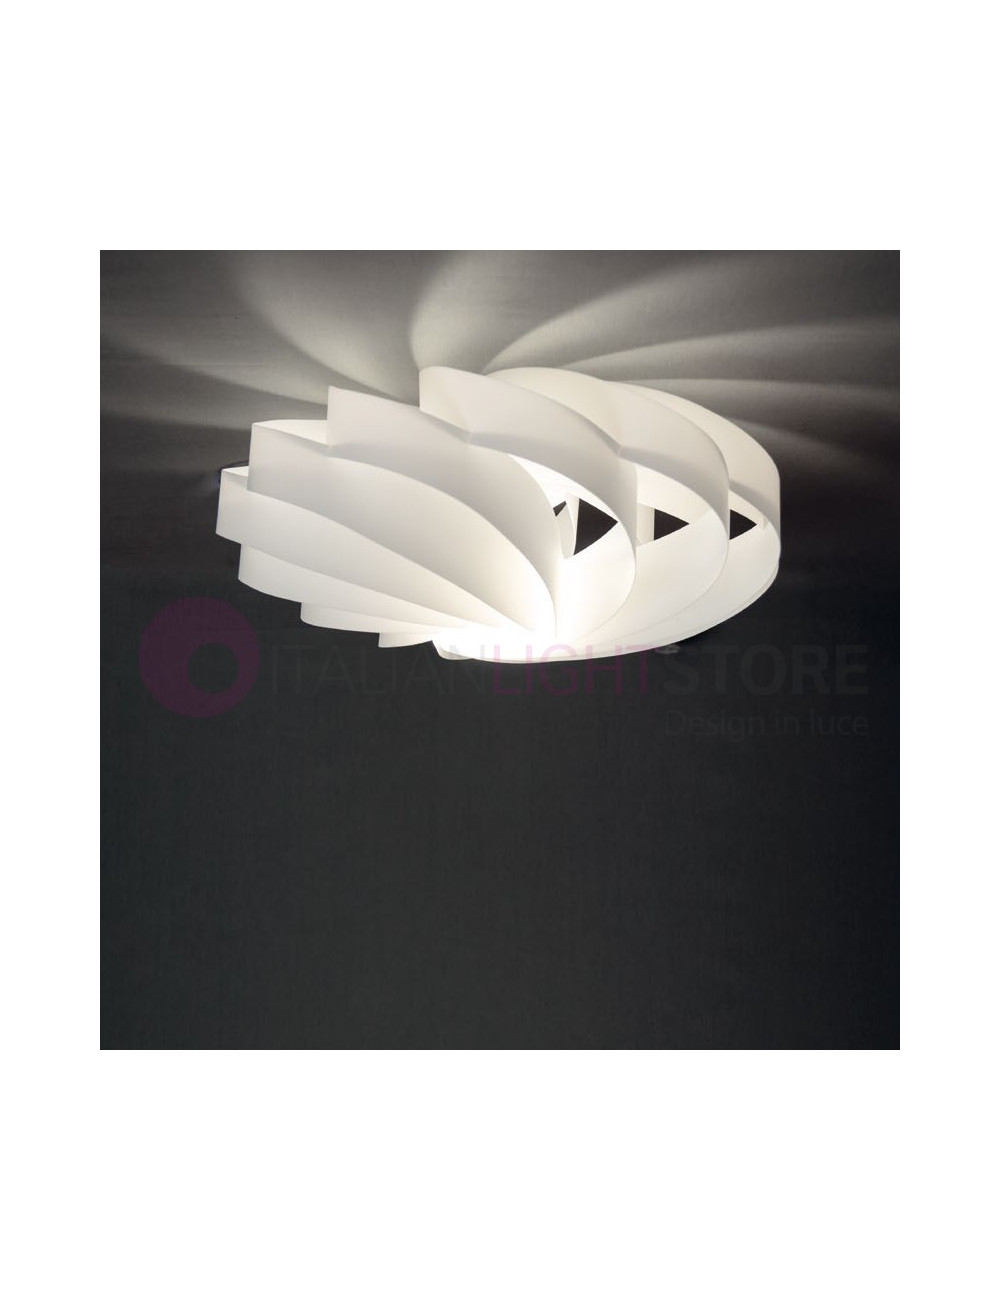 FLAT by Linea Zero, Plafonnier Plafonnier 4 Mesures Design Moderne Polilux